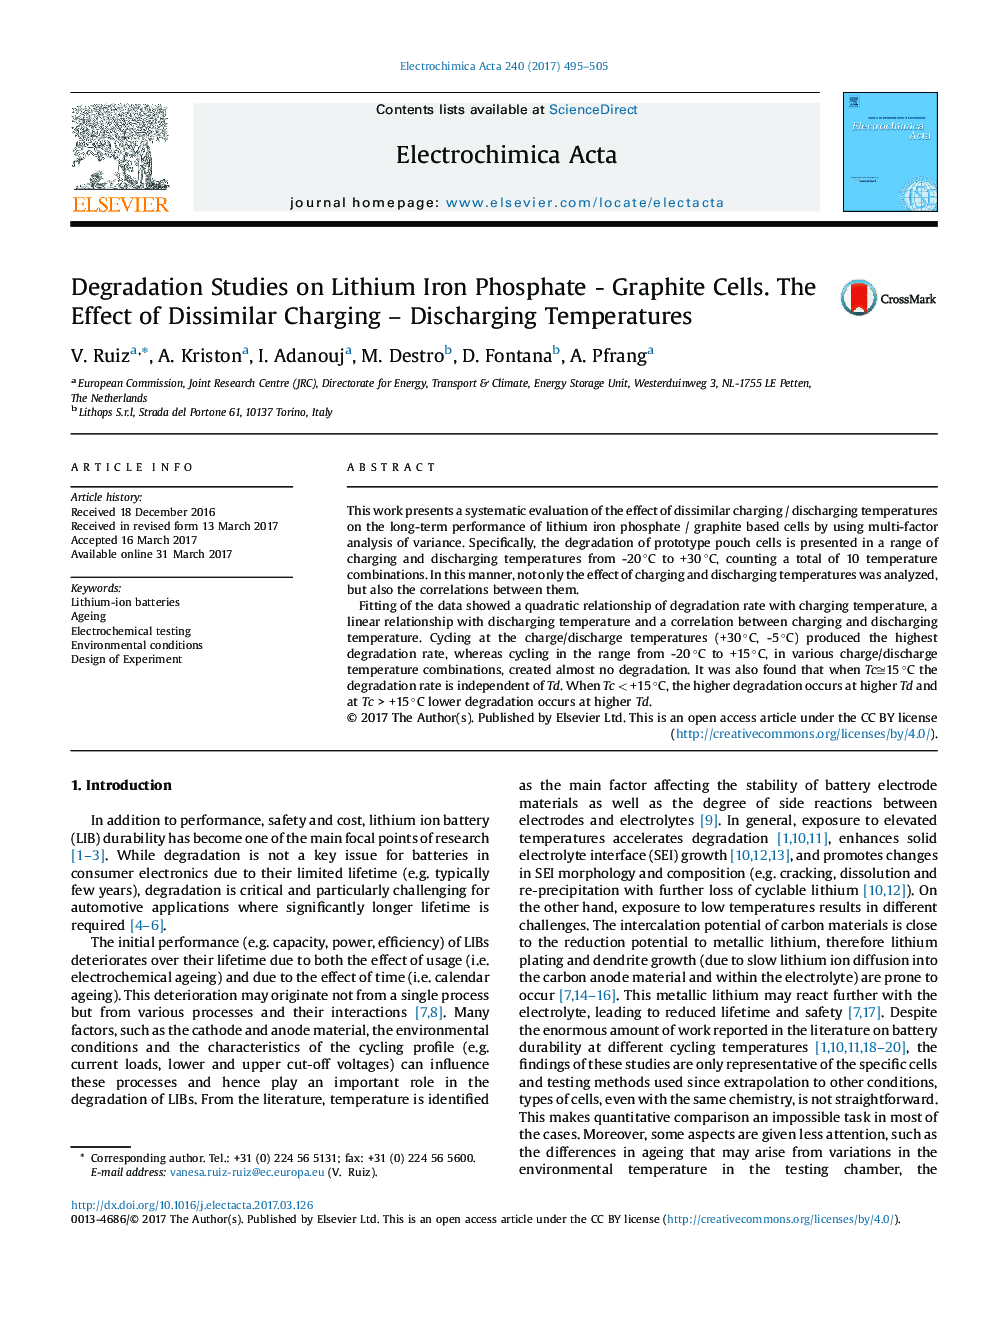 Degradation Studies on Lithium Iron Phosphate - Graphite Cells. The Effect of Dissimilar Charging - Discharging Temperatures